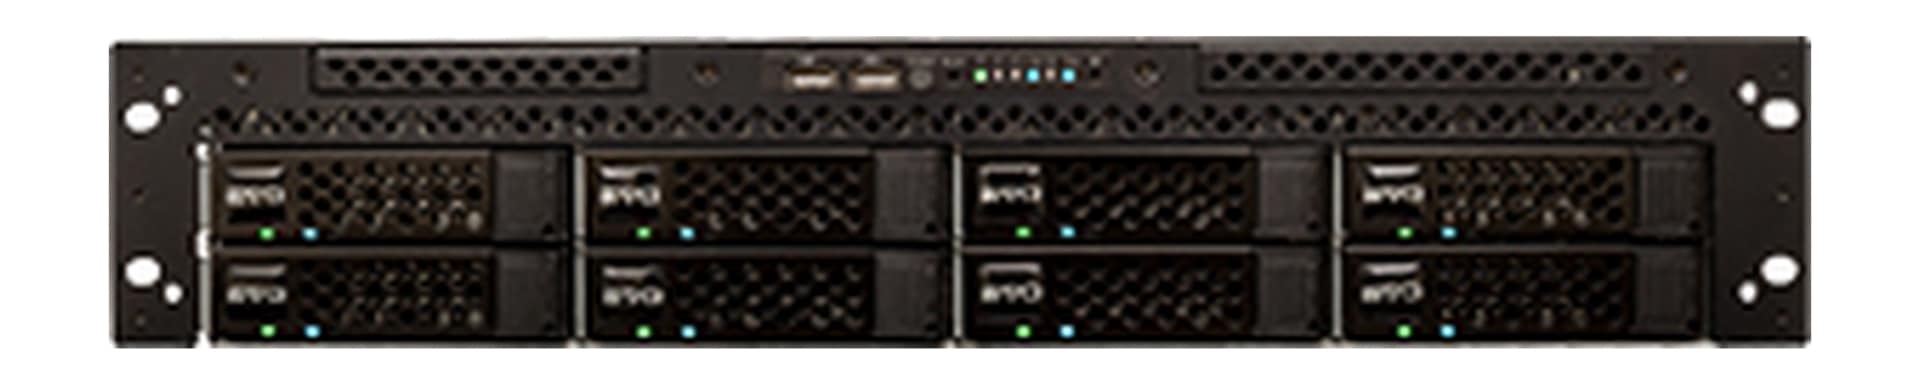 SNS EVO 2U 8 Bay Shared Storage Server with 32TB Raw Capacity Hard Drive